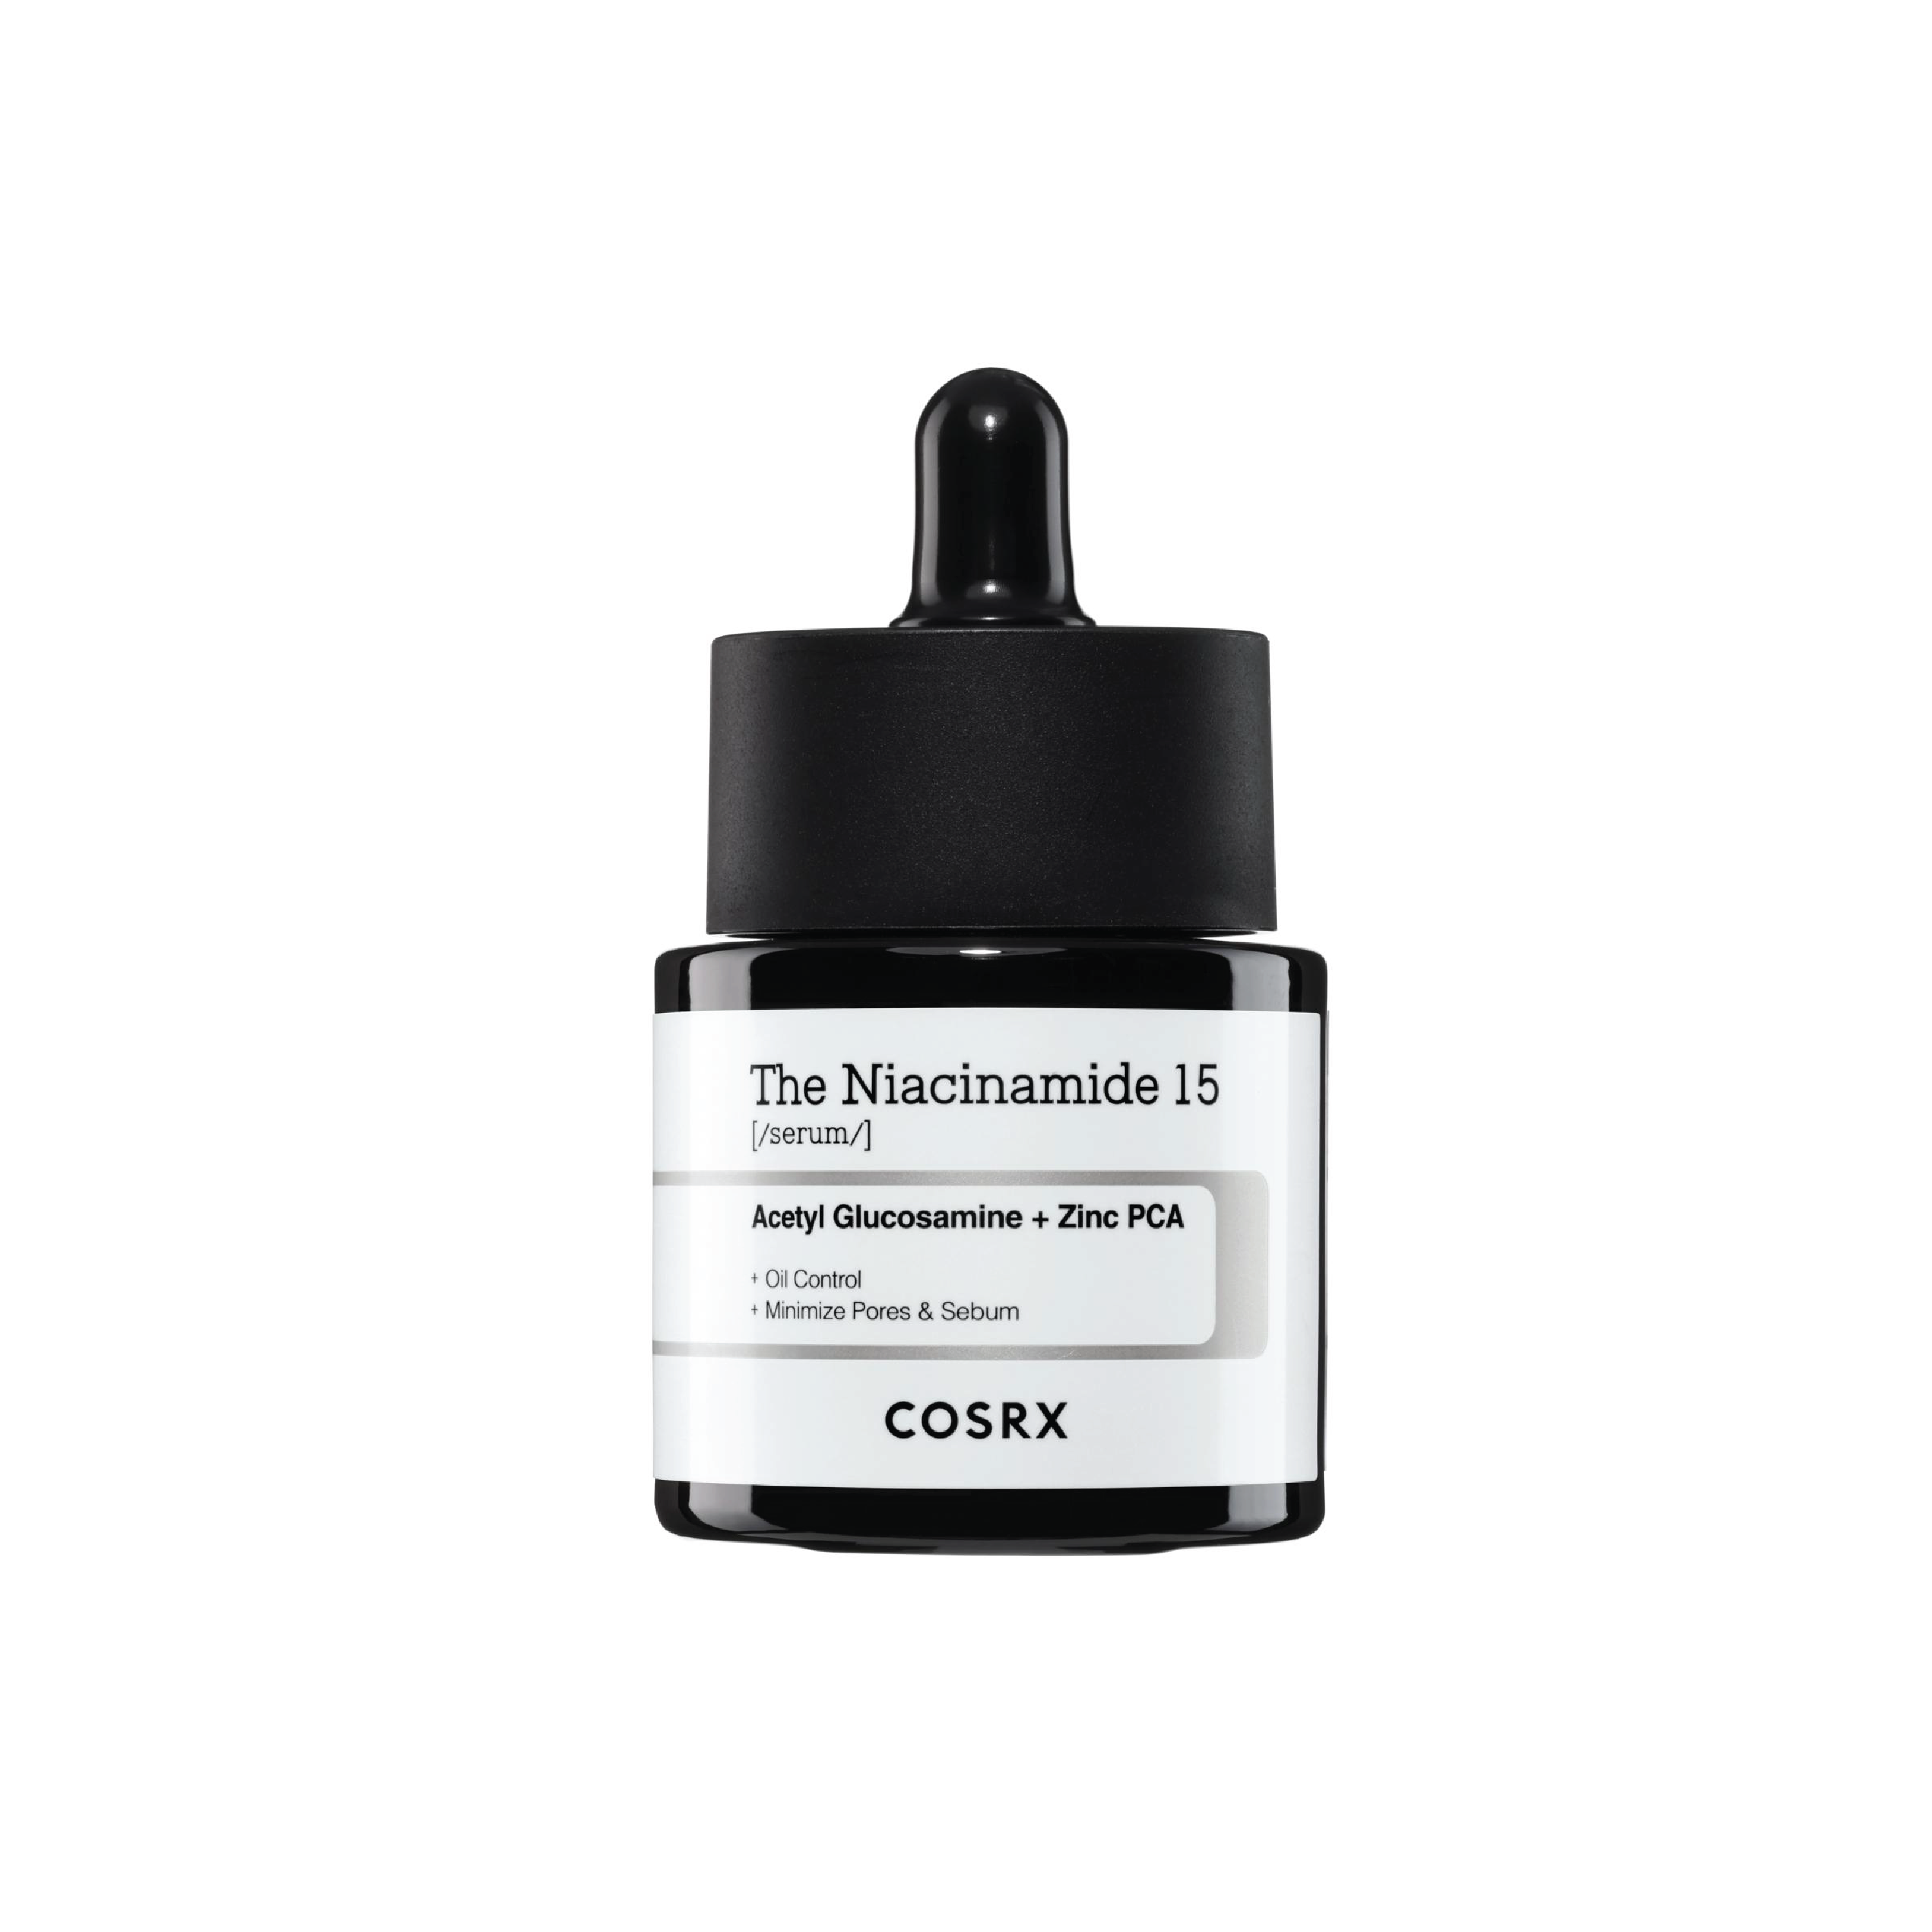 COSRX The Niacinamide 15 Serum, 20 ml